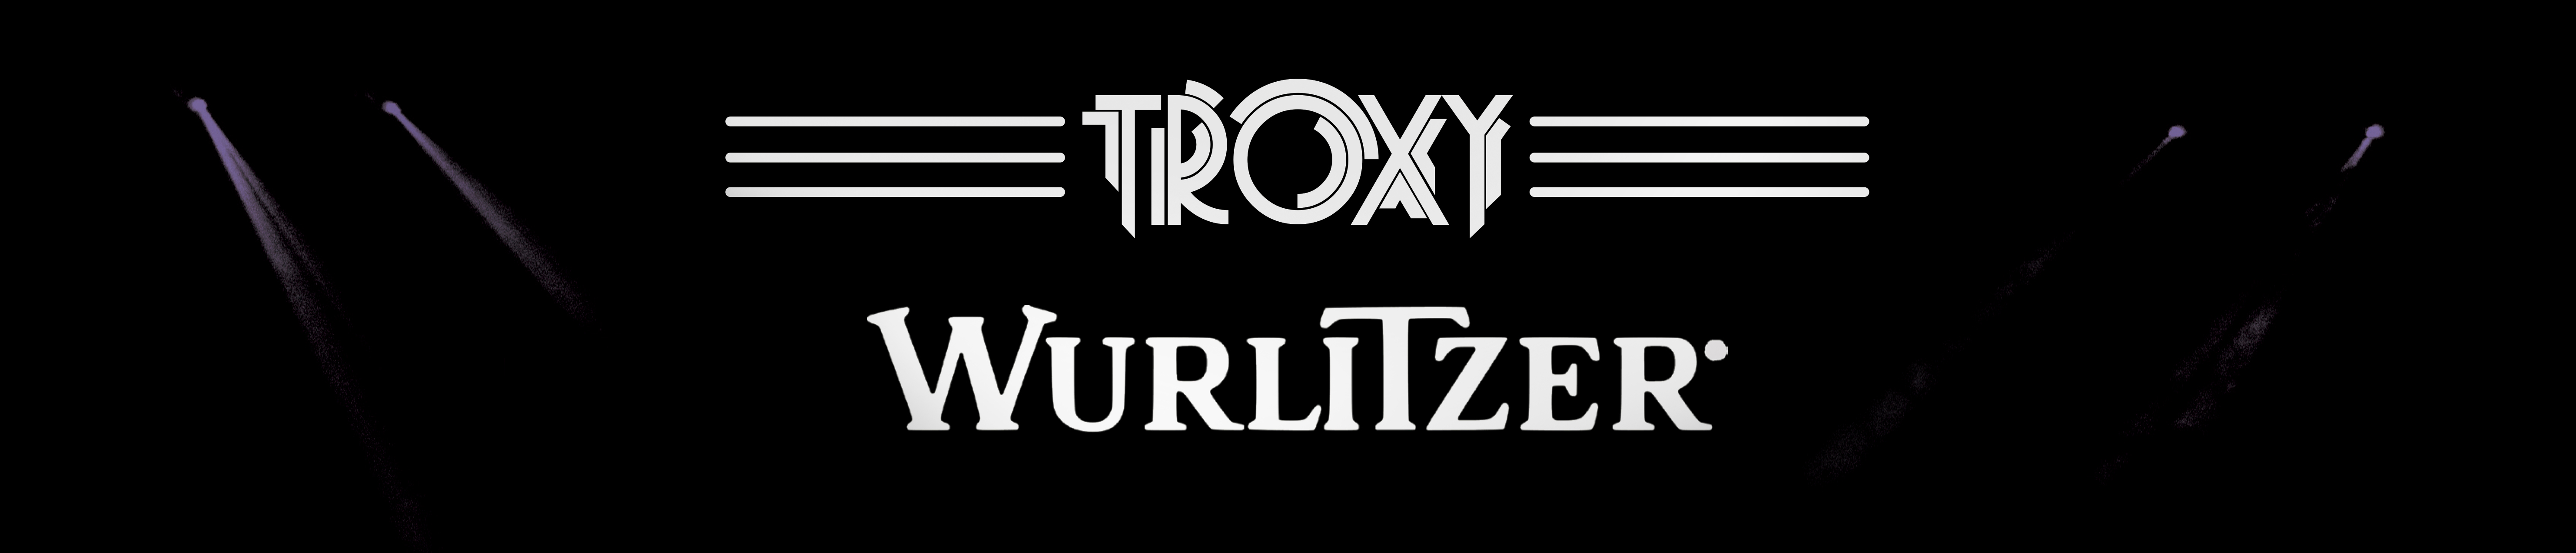 Troxy Wurlitzer